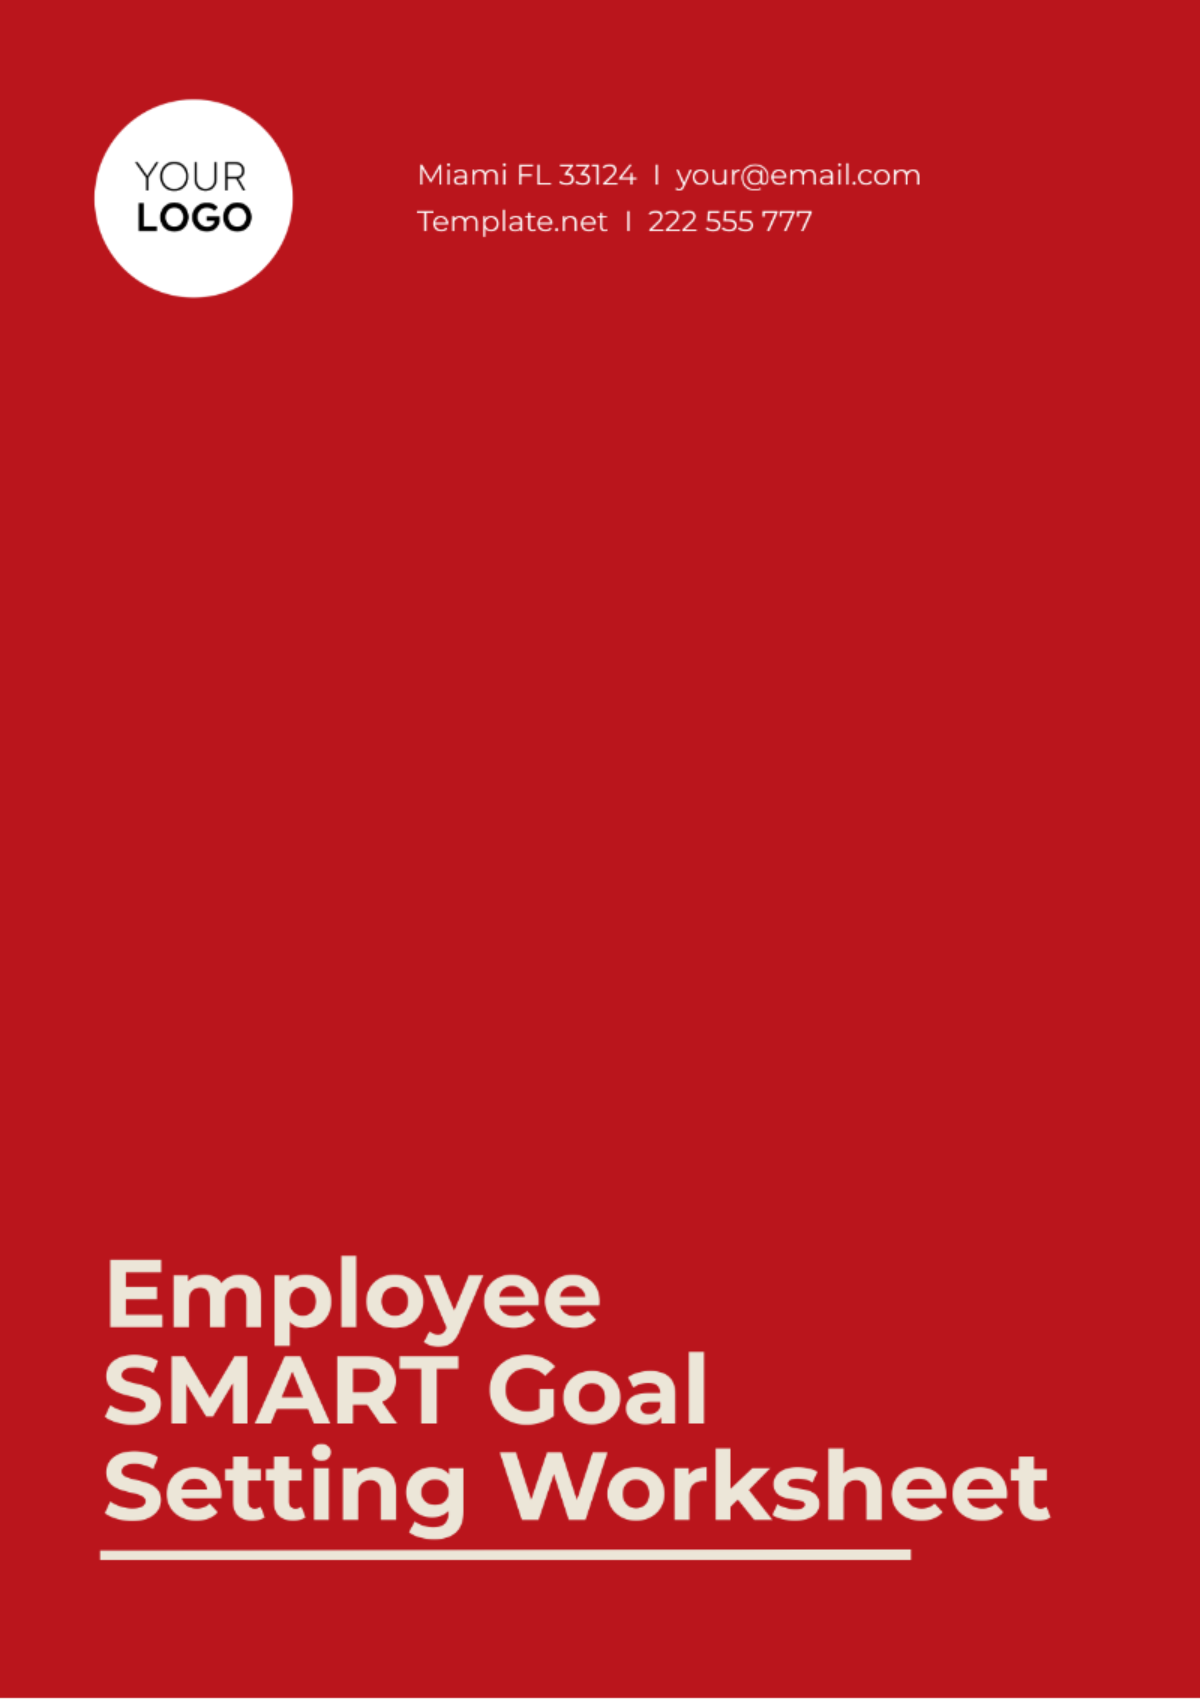 Employee SMART Goal Setting Worksheet Template